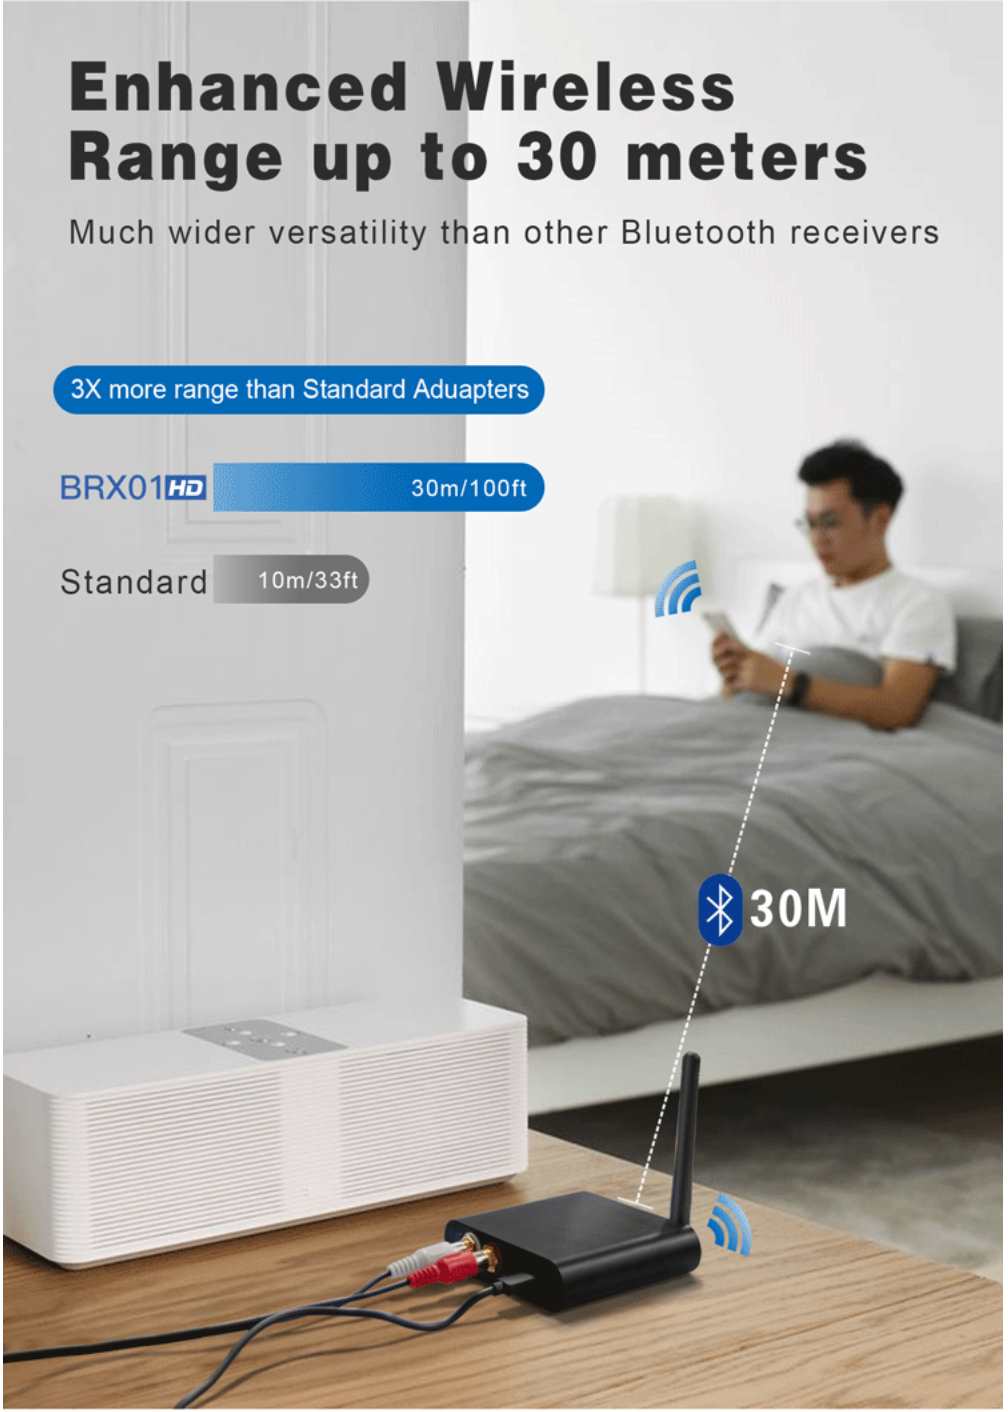 AKaudio Qualcomm BRX HD Optical wireless Bluetooth 5.0 stereo Audio Music Receiver - TECHOBOOM